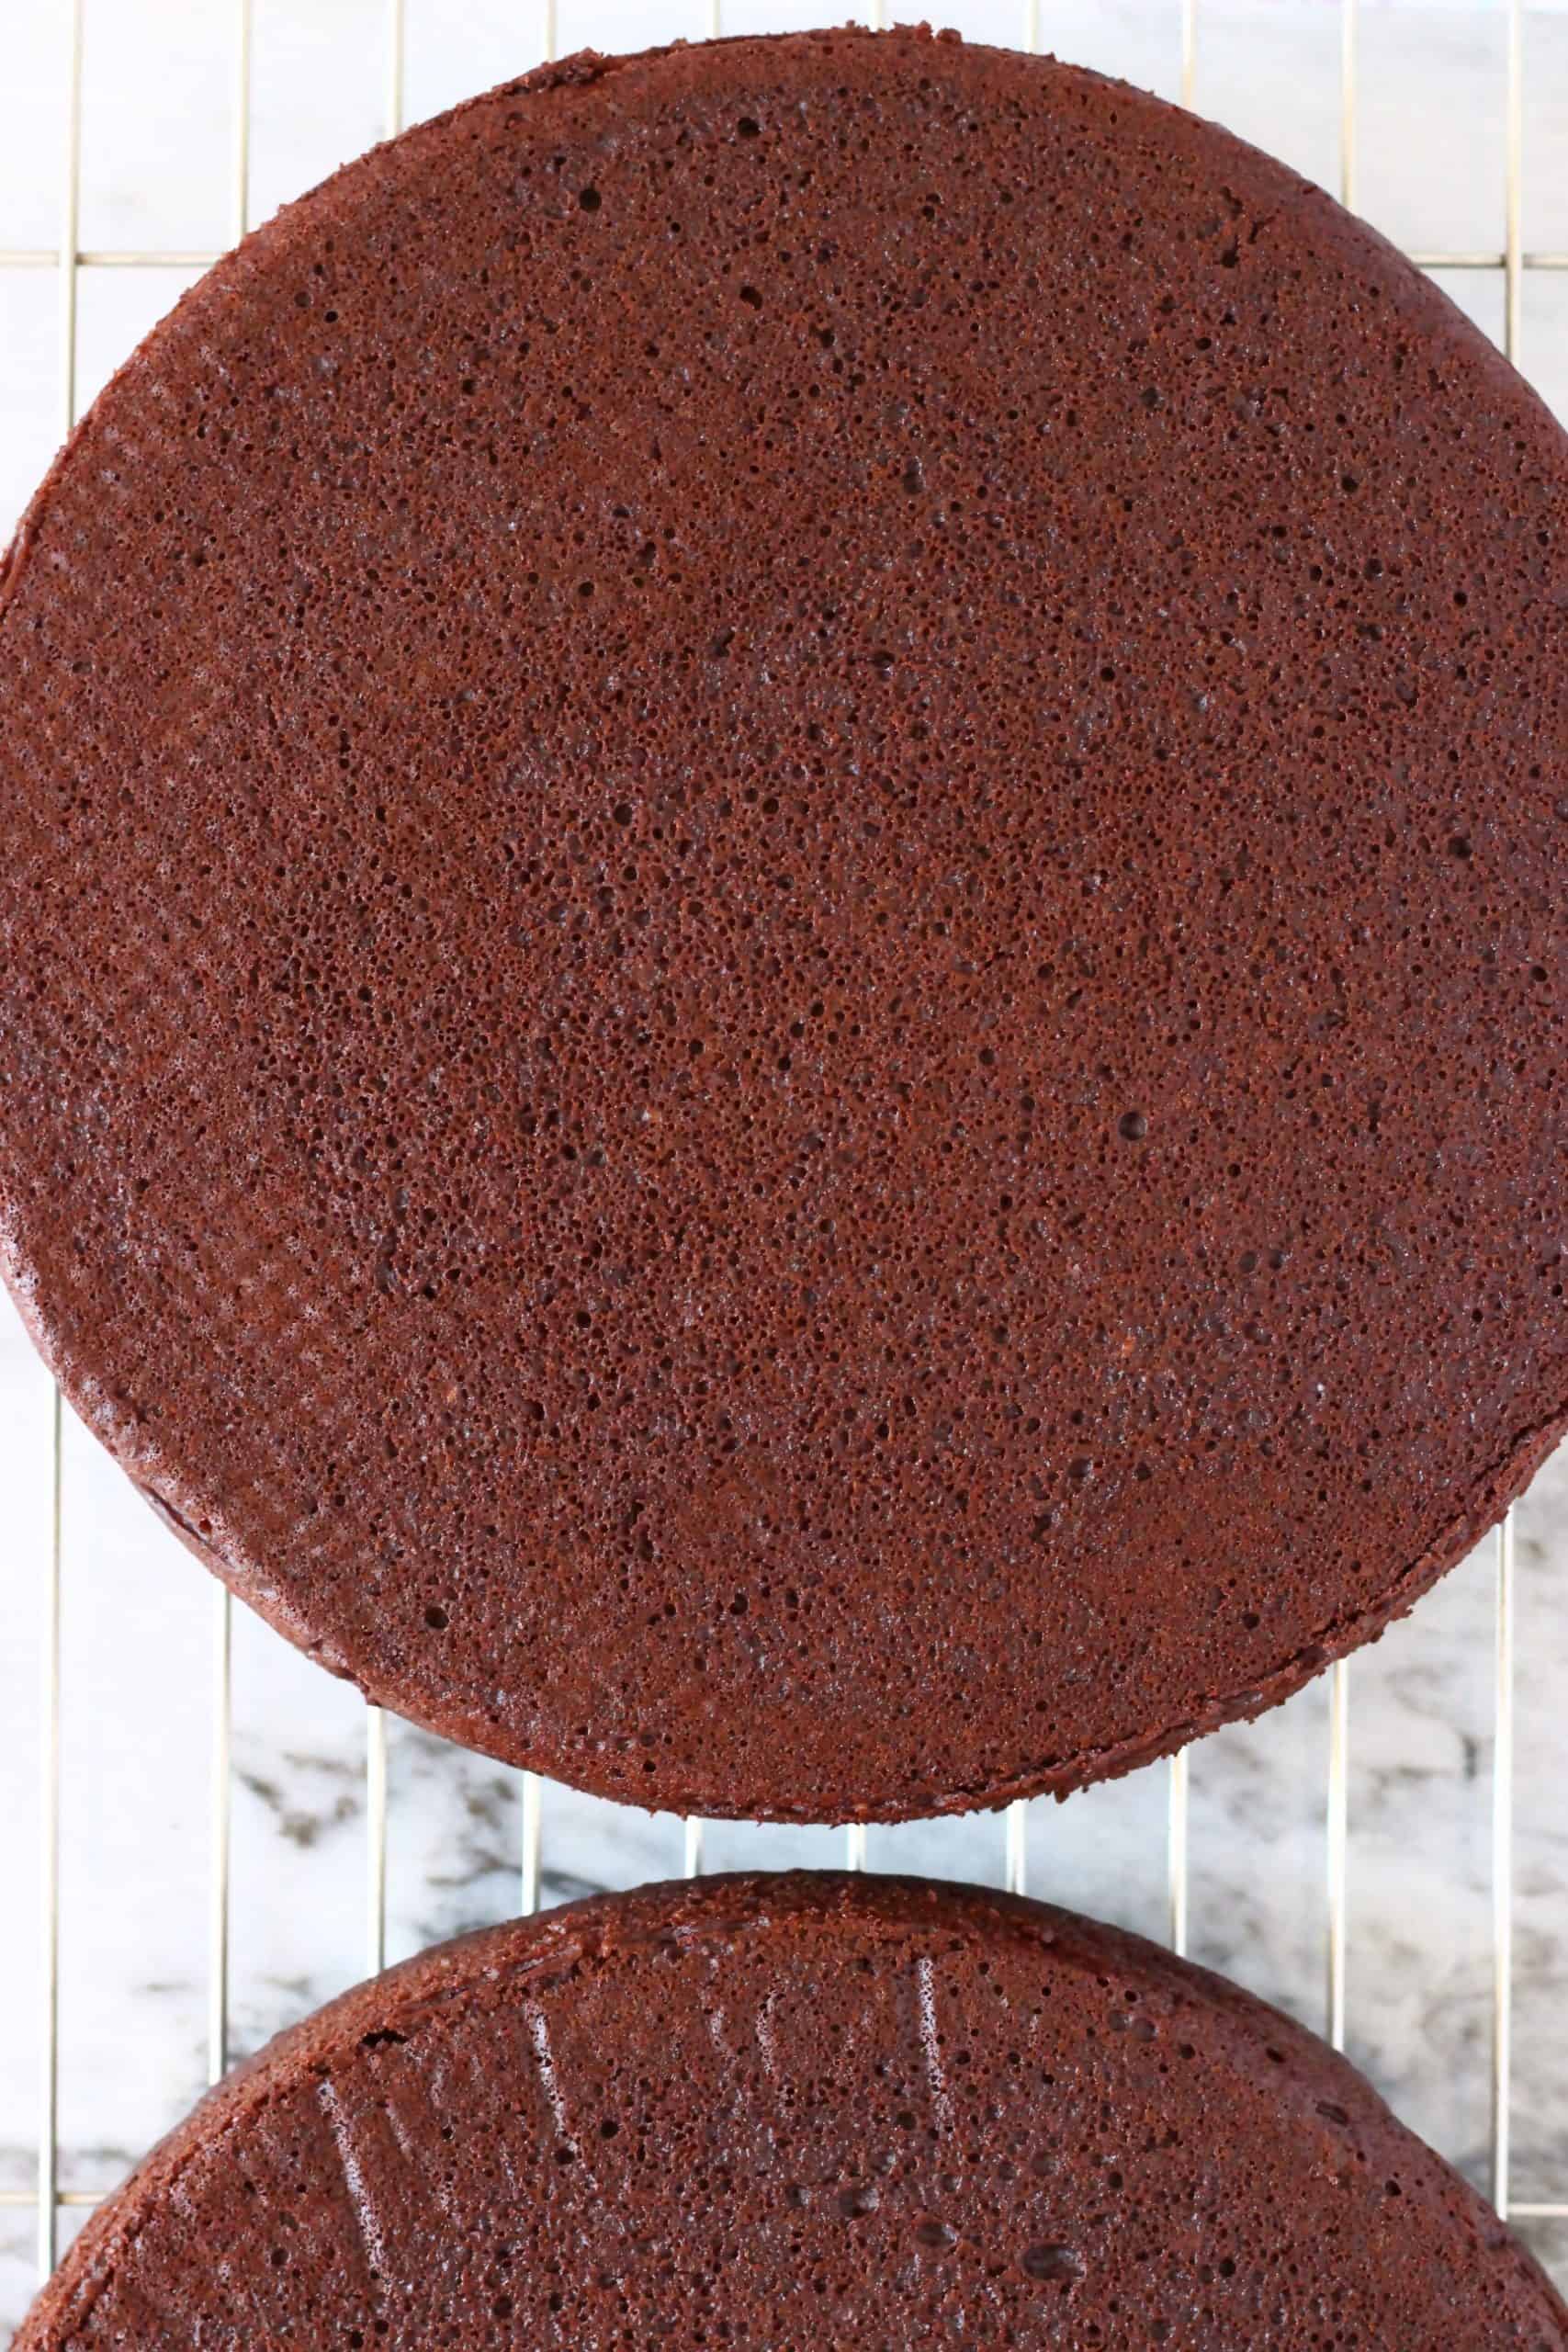 Two gluten-free vegan chocolate sponge cakes on a wire rack 